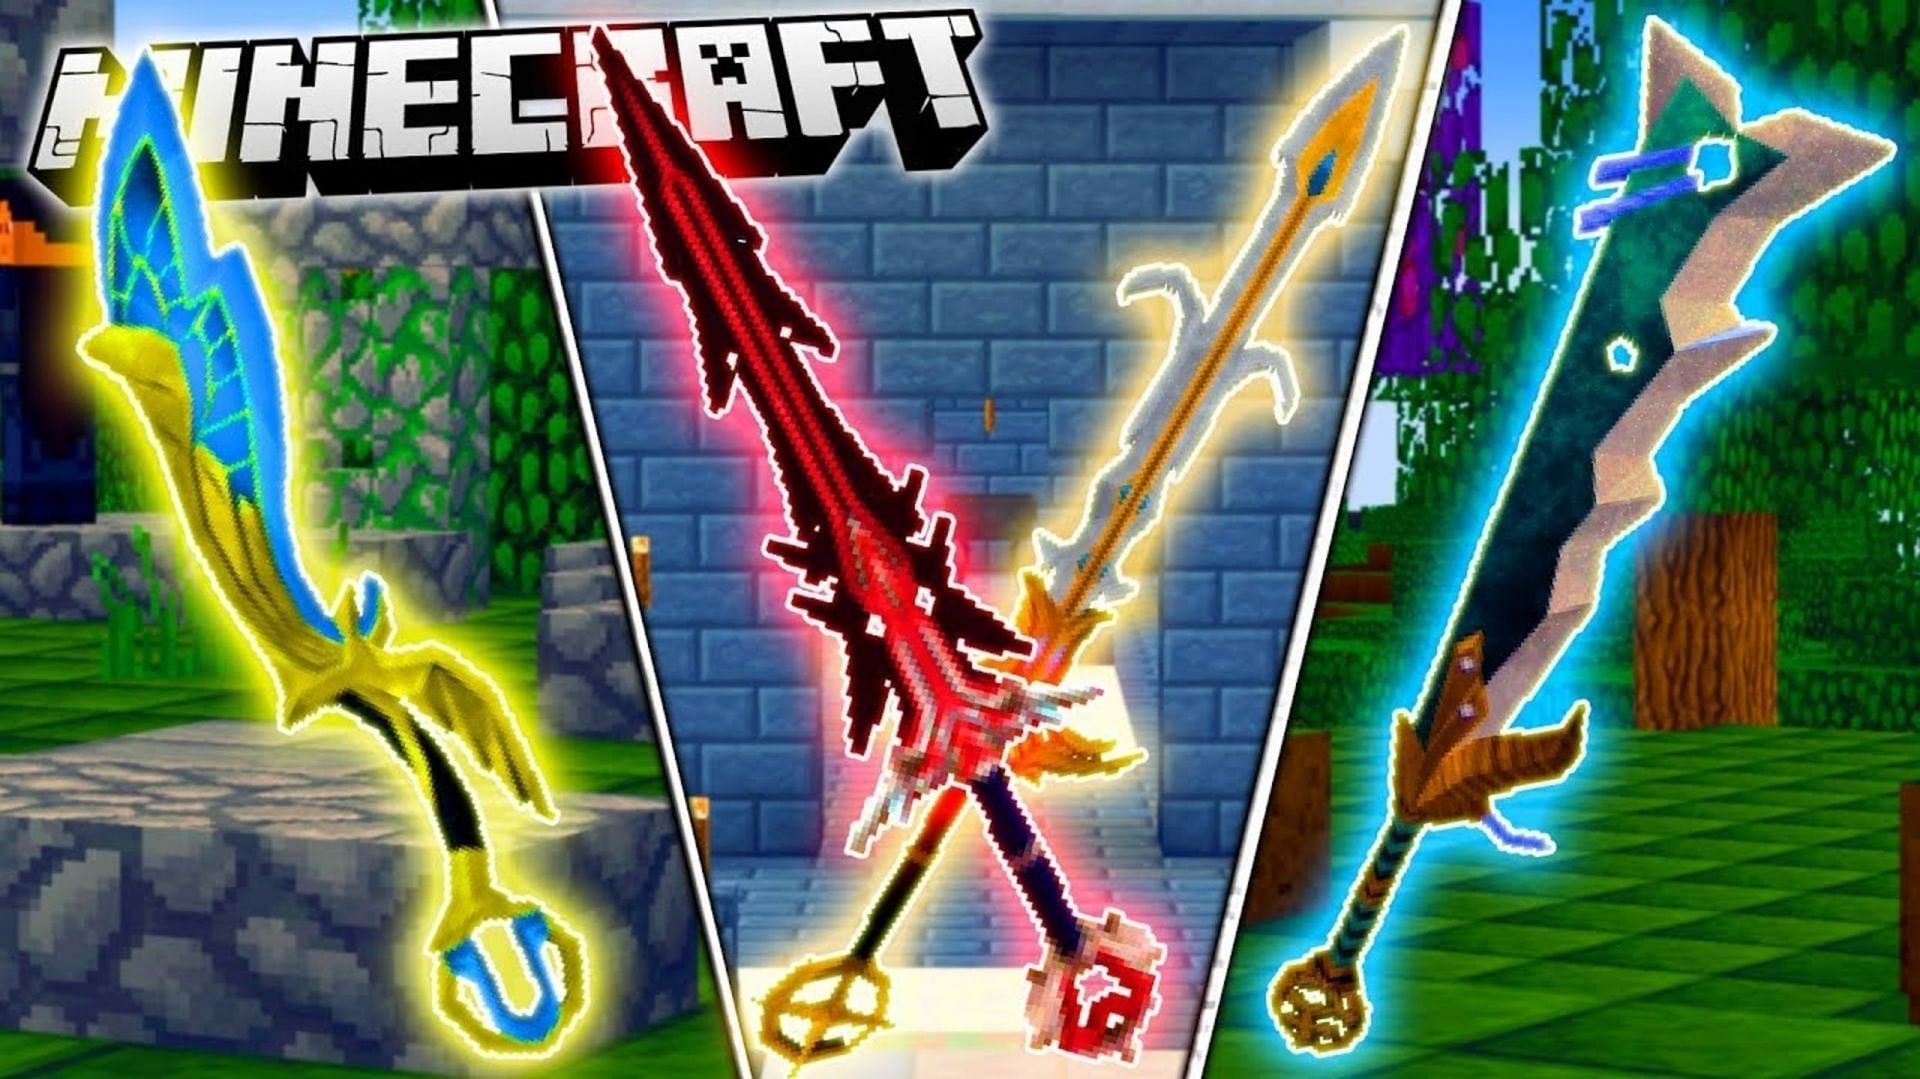 Advanced Swords - Minecraft Mods - CurseForge